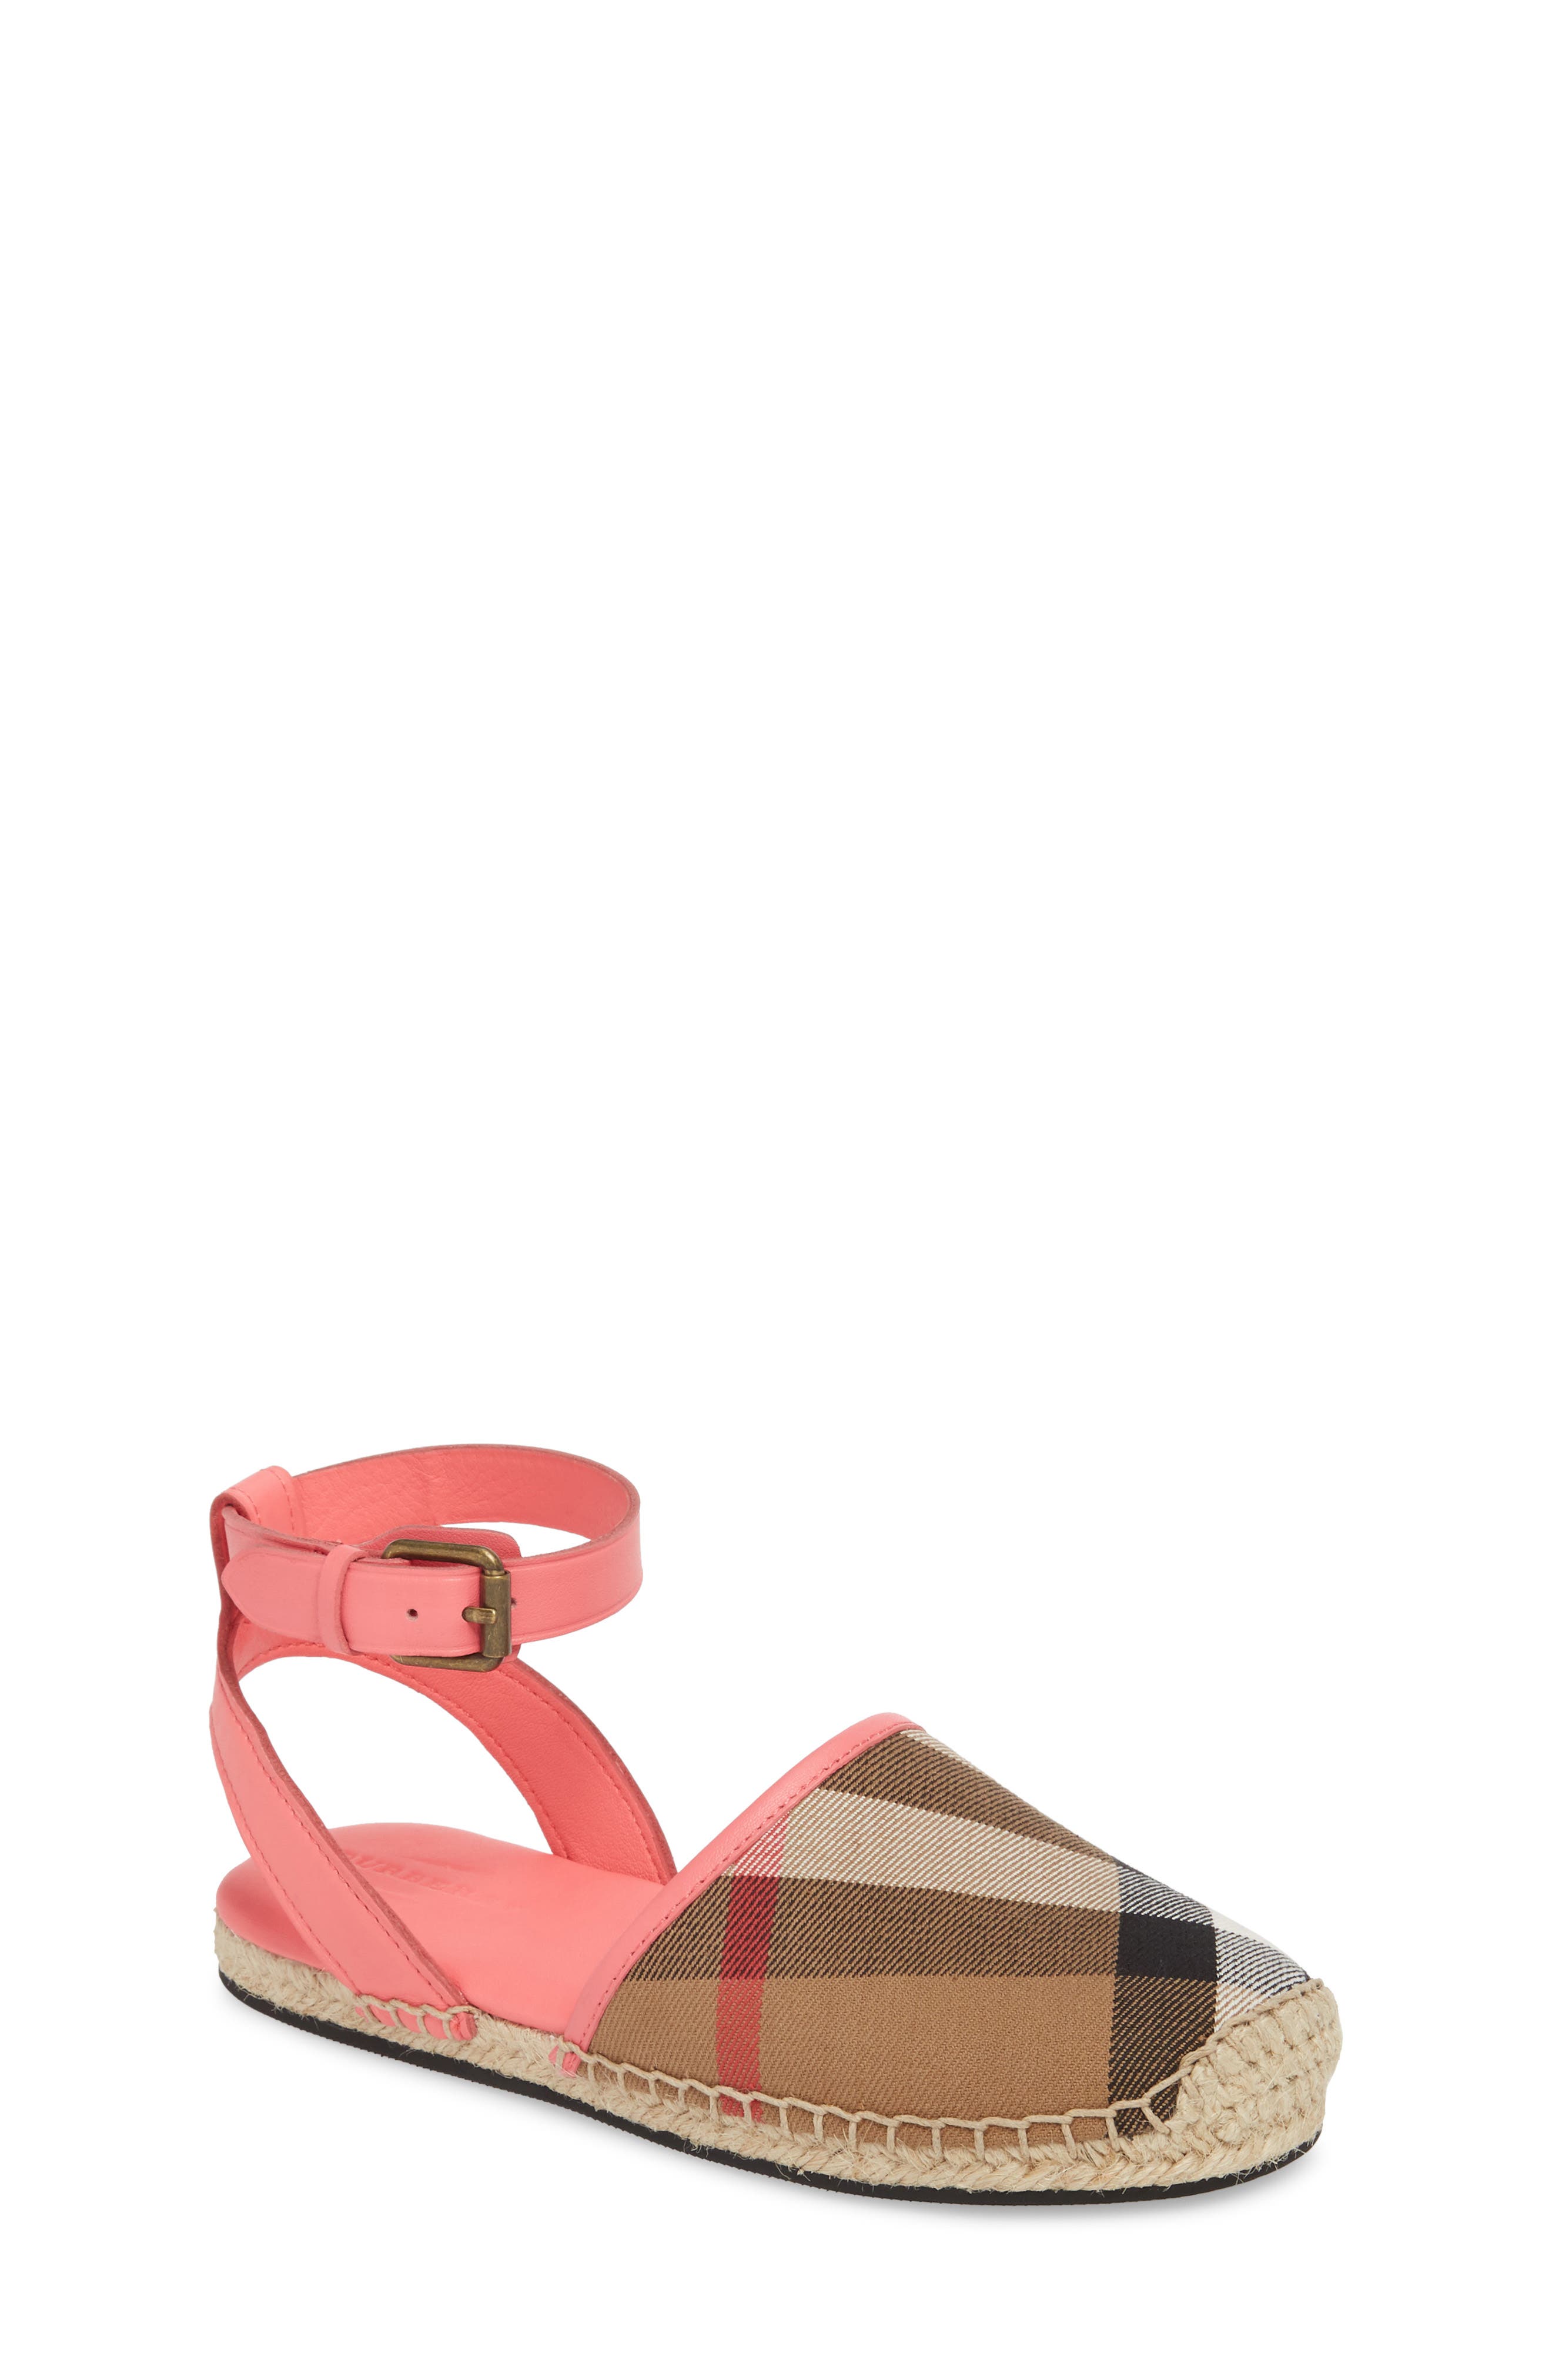 burberry sandals kids pink